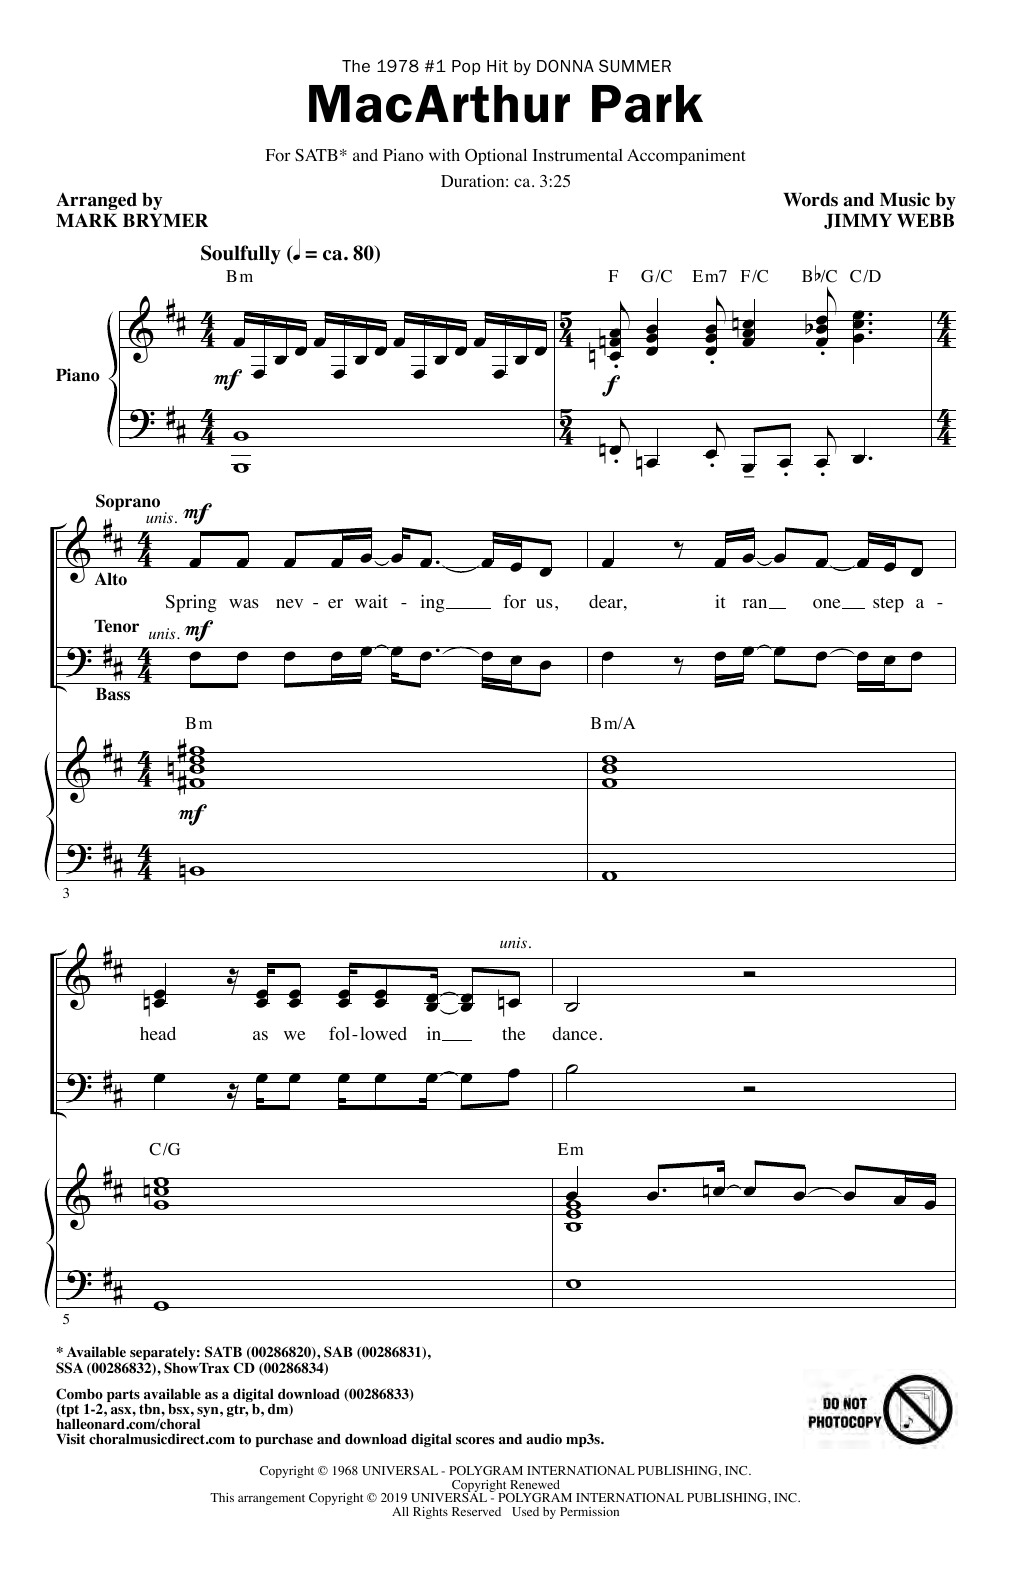 Donna Summer MacArthur Park (arr. Mark Brymer) sheet music notes and chords arranged for SAB Choir